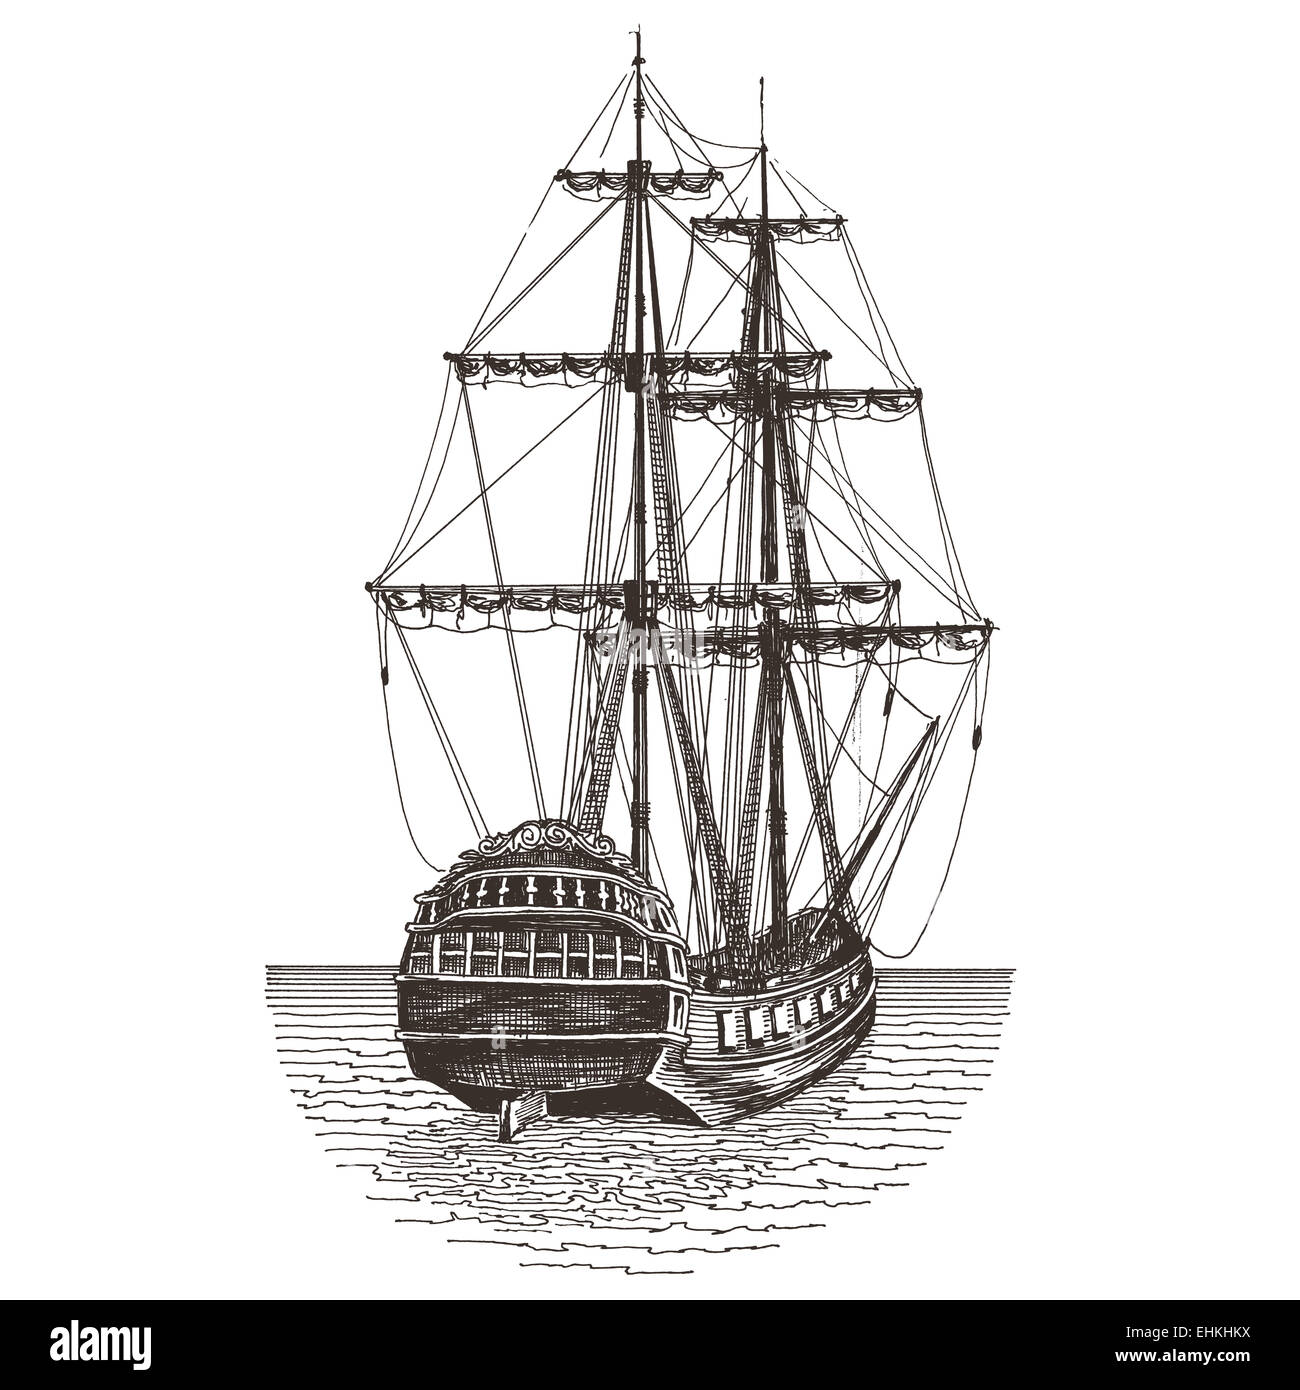 Discover 142+ vessel sketch latest